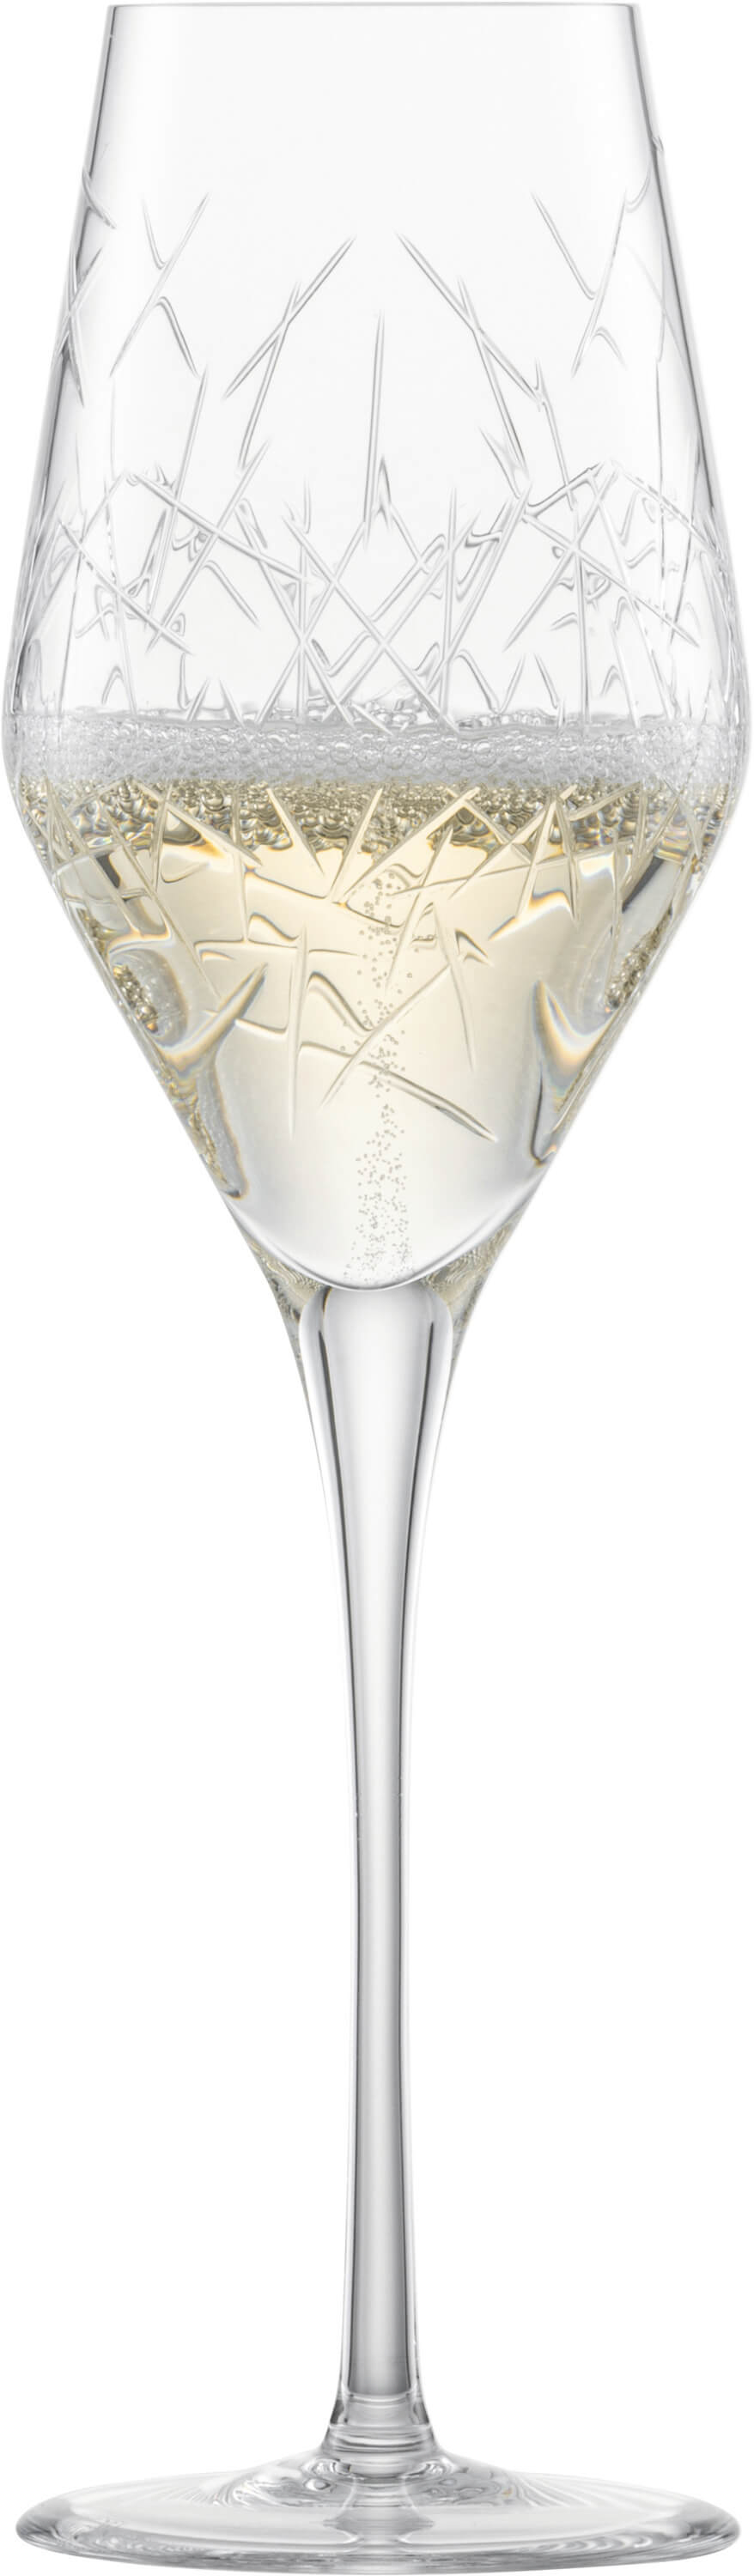 Champagnerglas Hommage Glace, Zwiesel Glas - 272ml (1 Stk.)